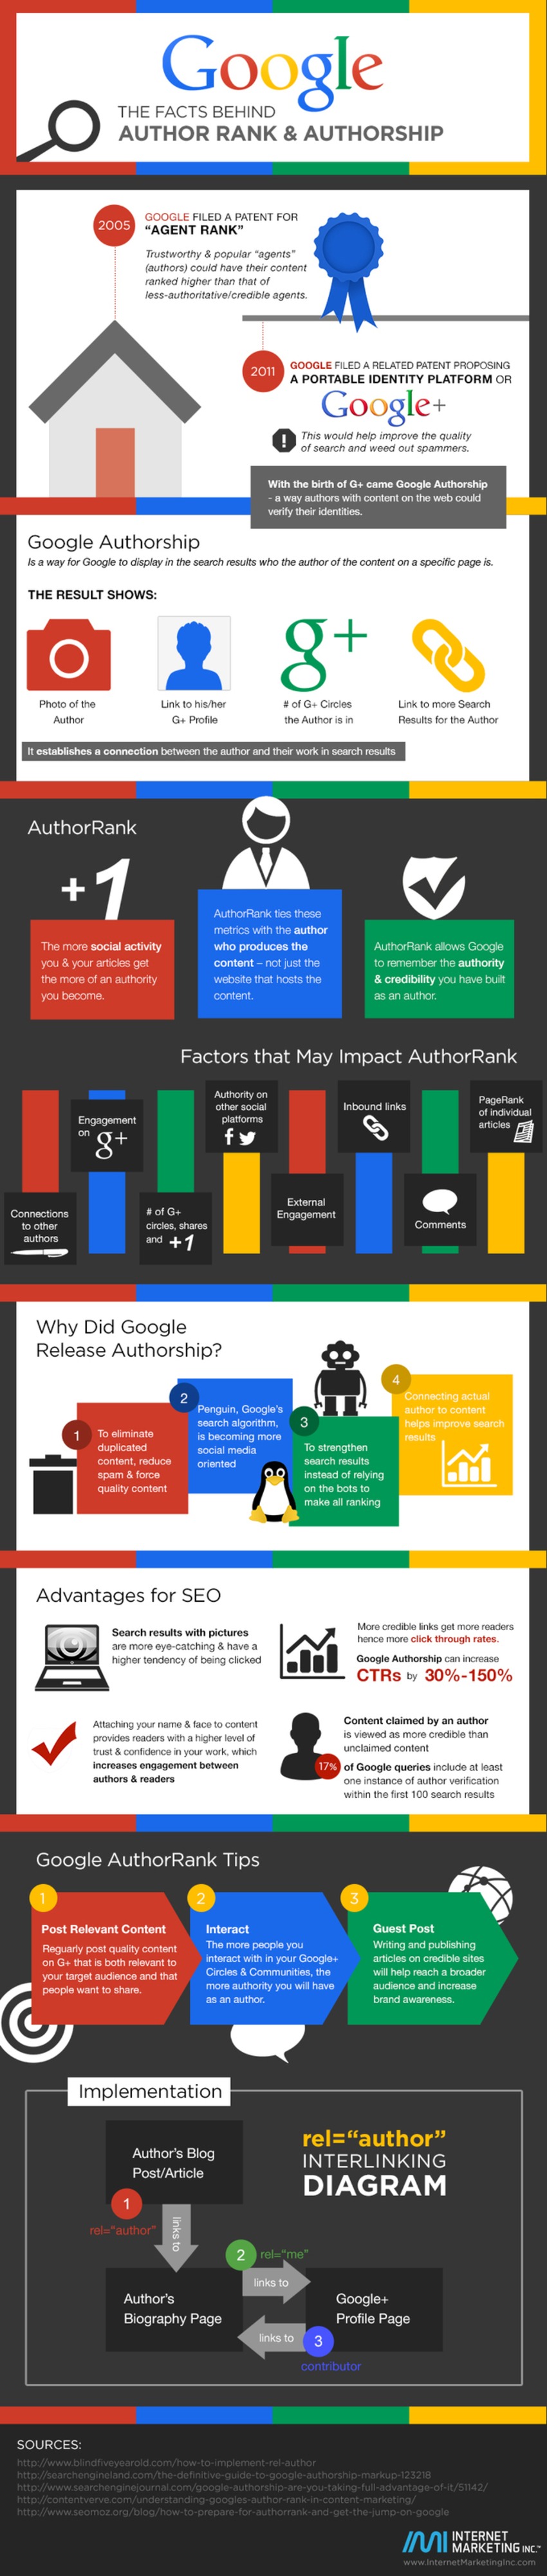 The Facts Behind Google Author Rank & Authorship [Infographic] - Internet Marketing Inc | #TheMarketingTechAlert | The MarTech Digest | Scoop.it